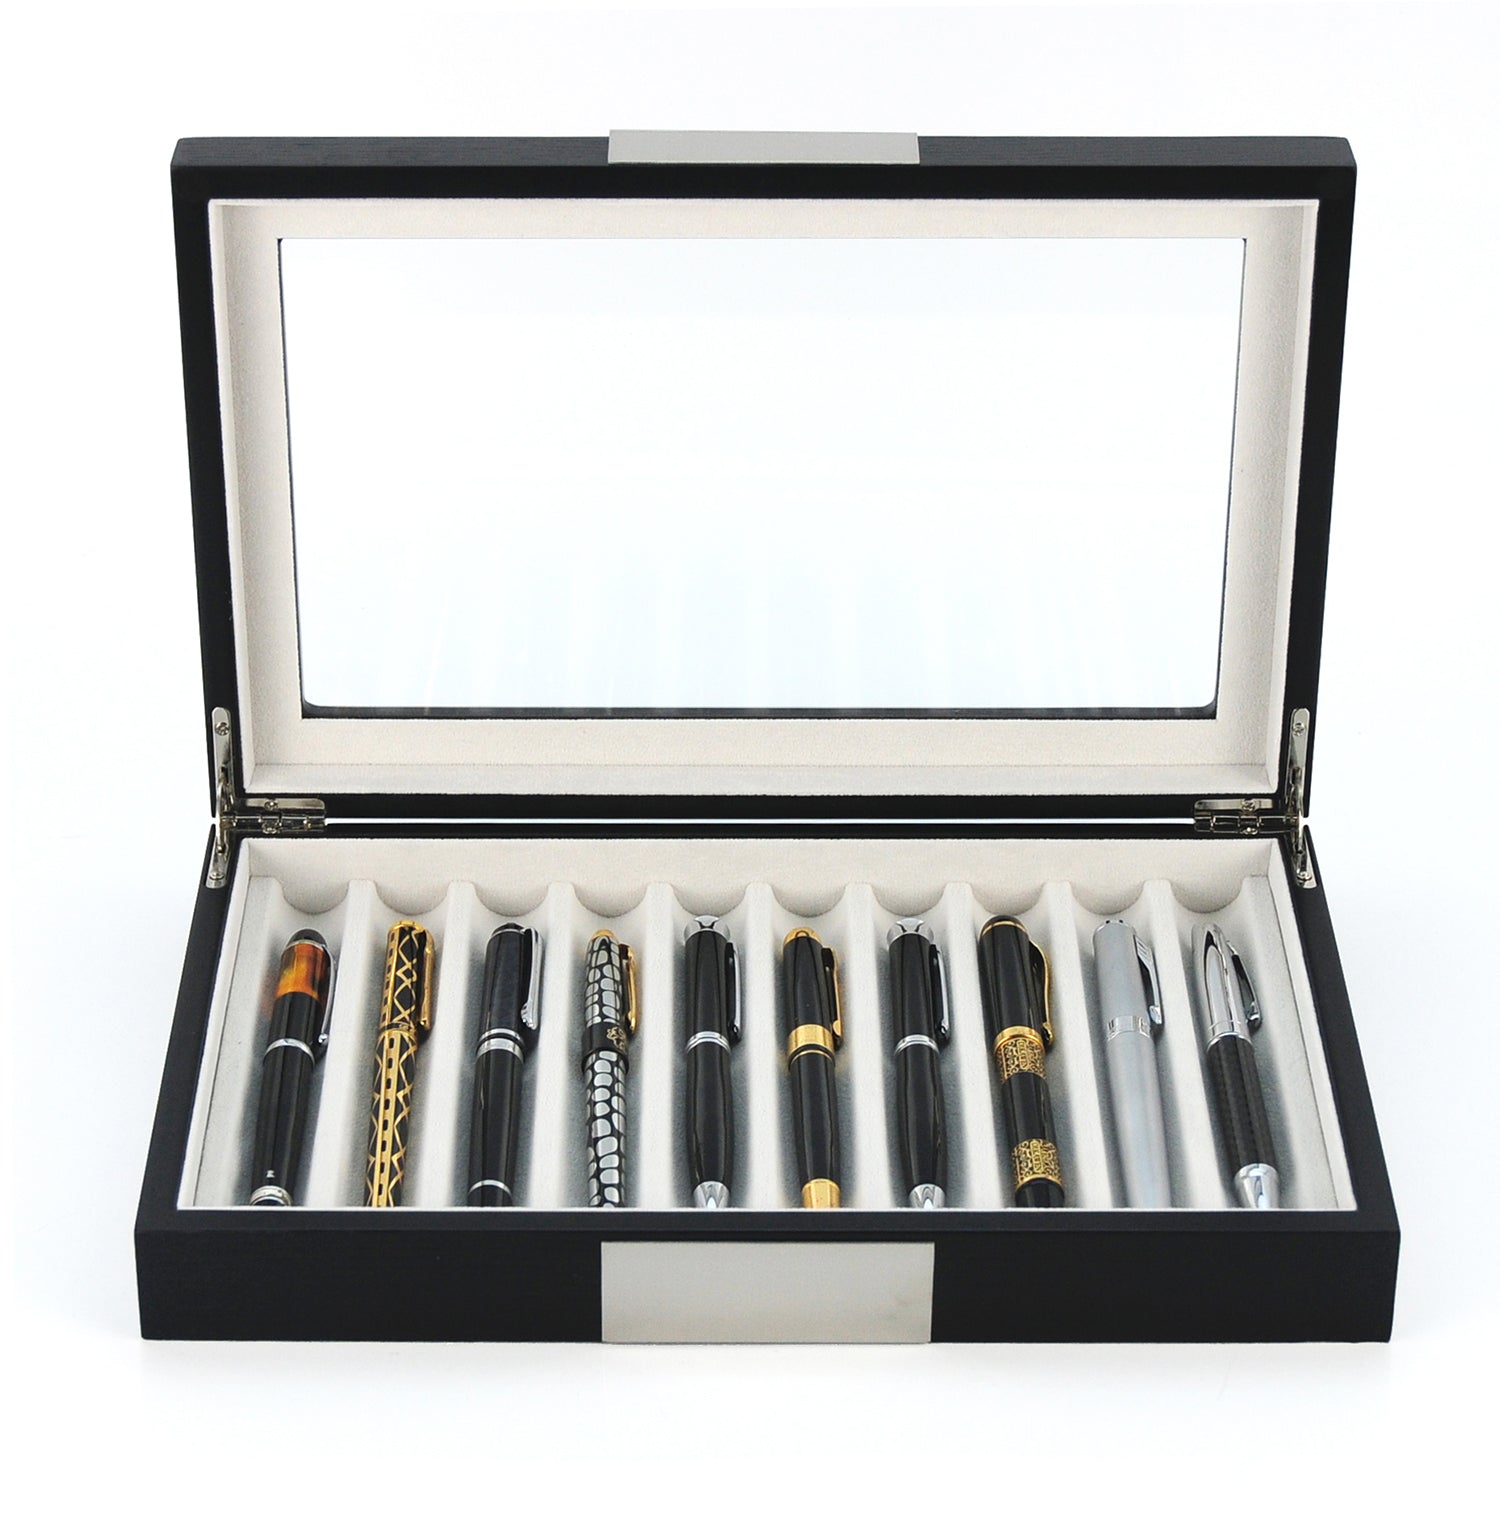 Bonaking Pen Display Case with 36 Pen Slots, Fountain Pen Case, Wood Pen  Storage Organizer, Pen Box Display for Men Gift, Pen Display Box with Glass